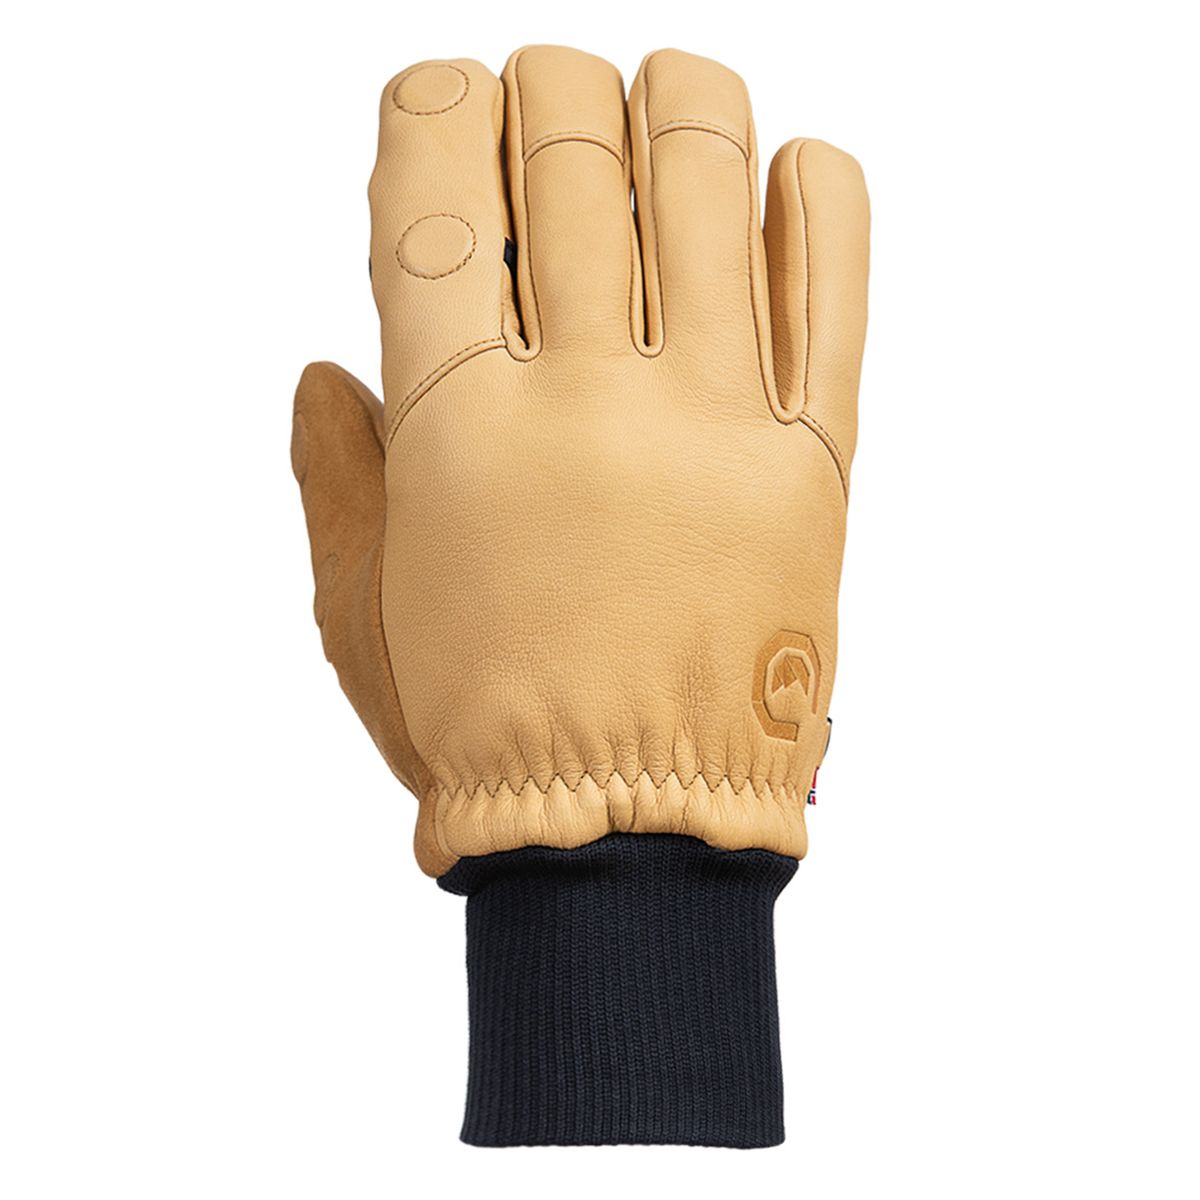 Vallerret Hatchet Leather Glove Natural, Leder-Fotohandschuhe S - Hellbraun